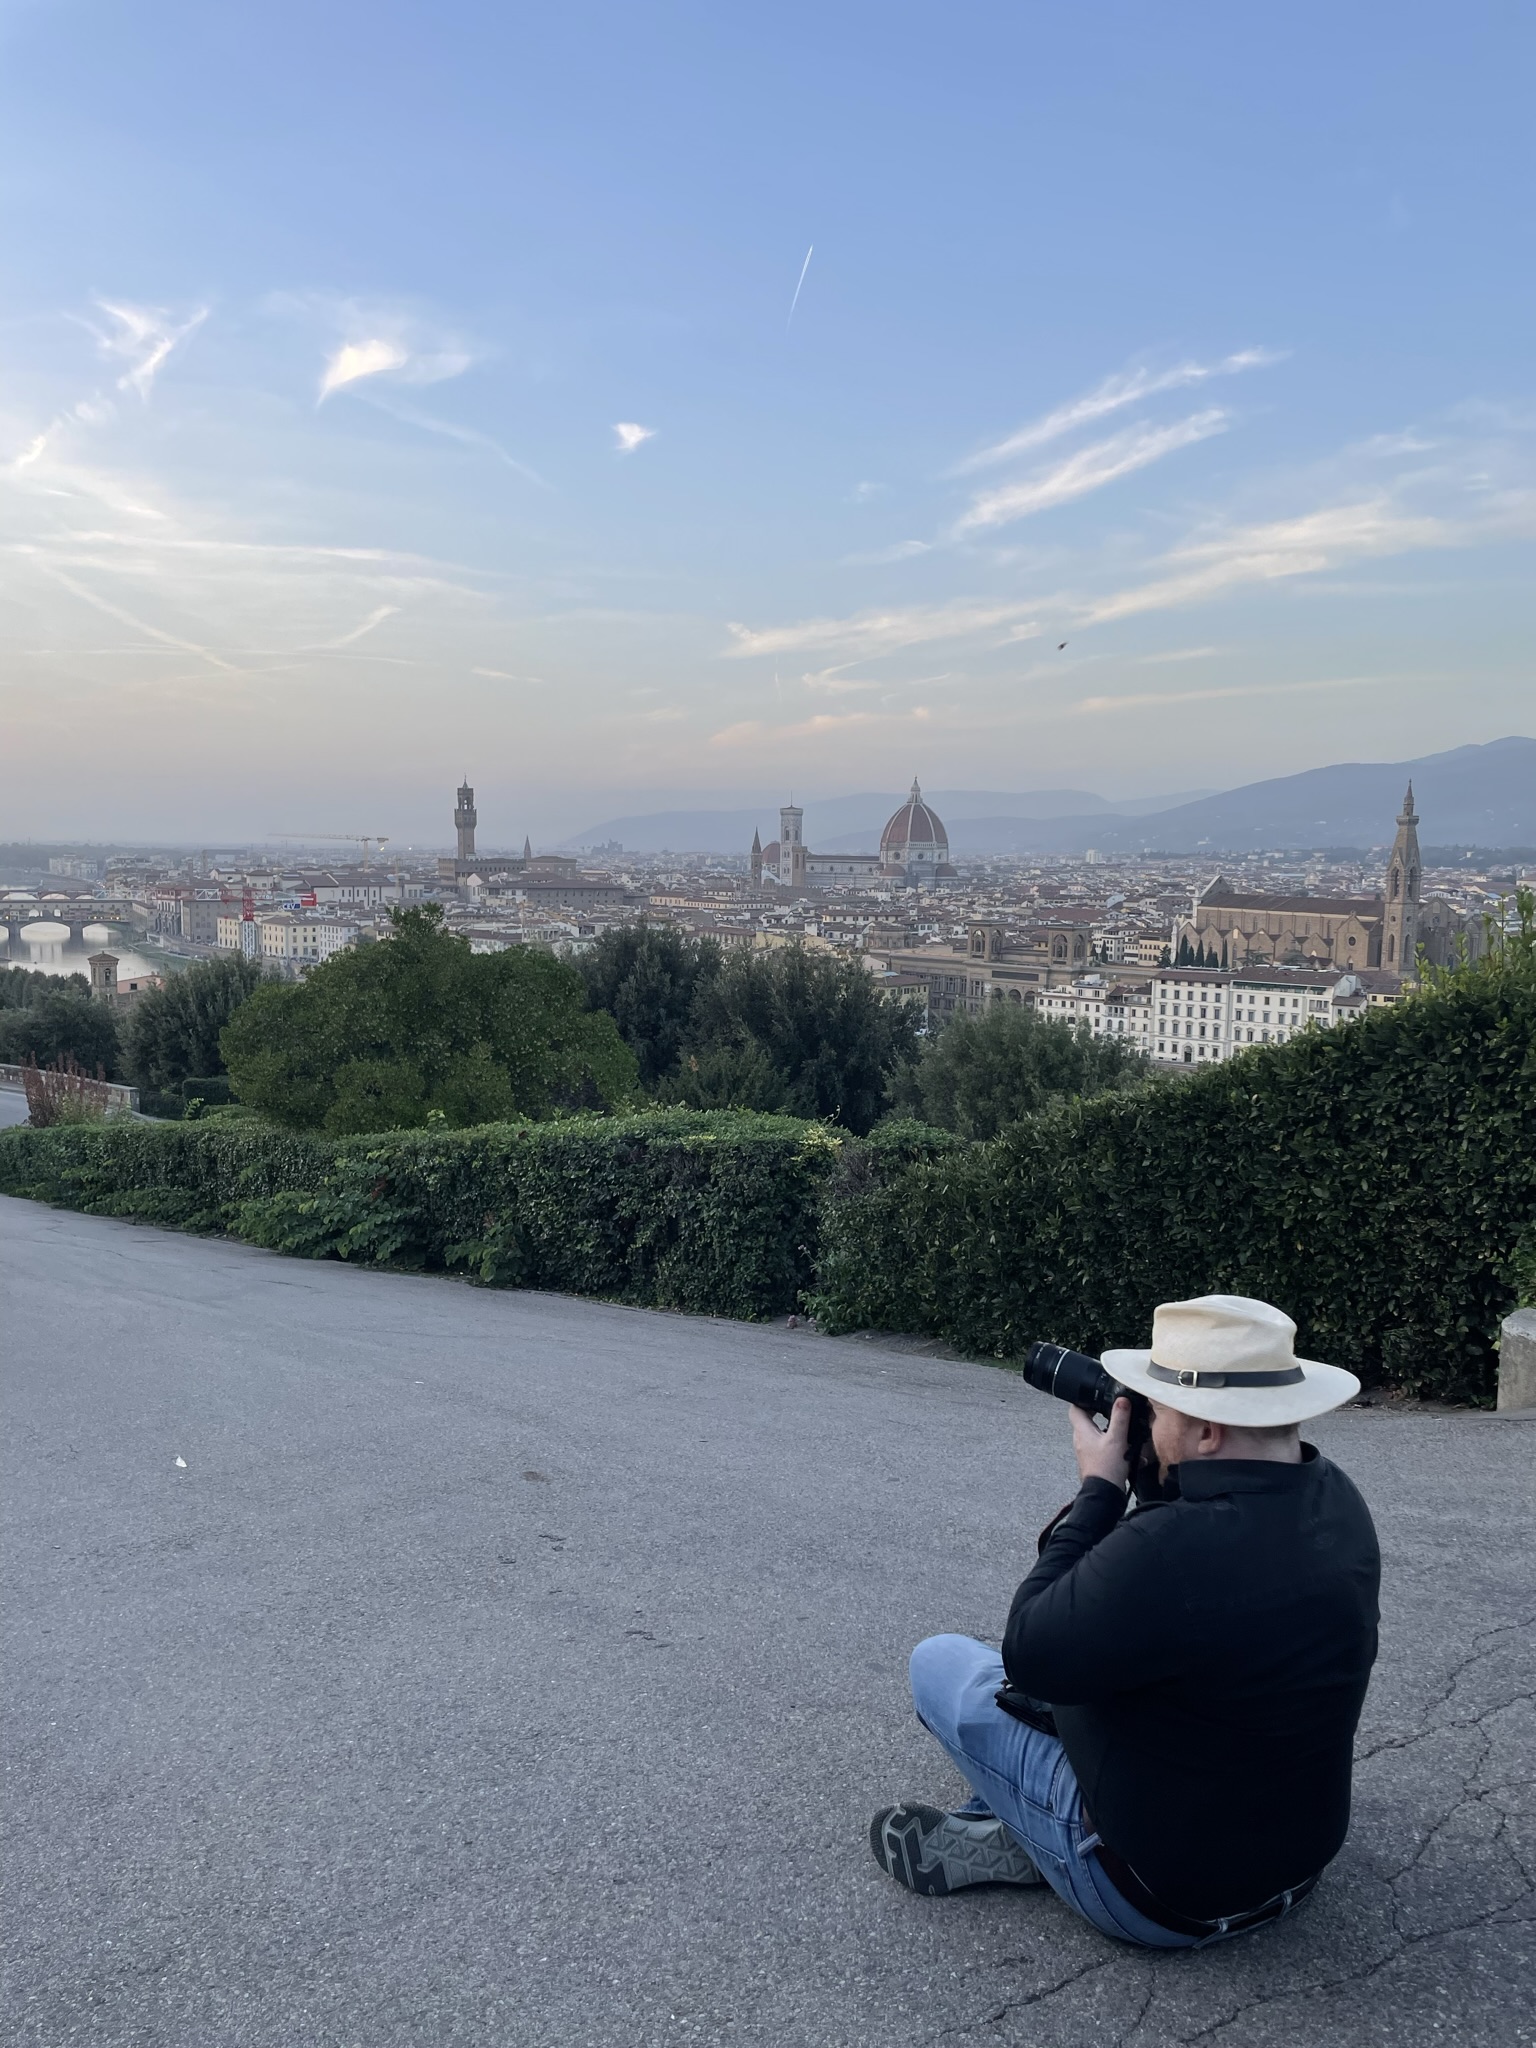 Joel Rendle photograhing the Duomo in Florence